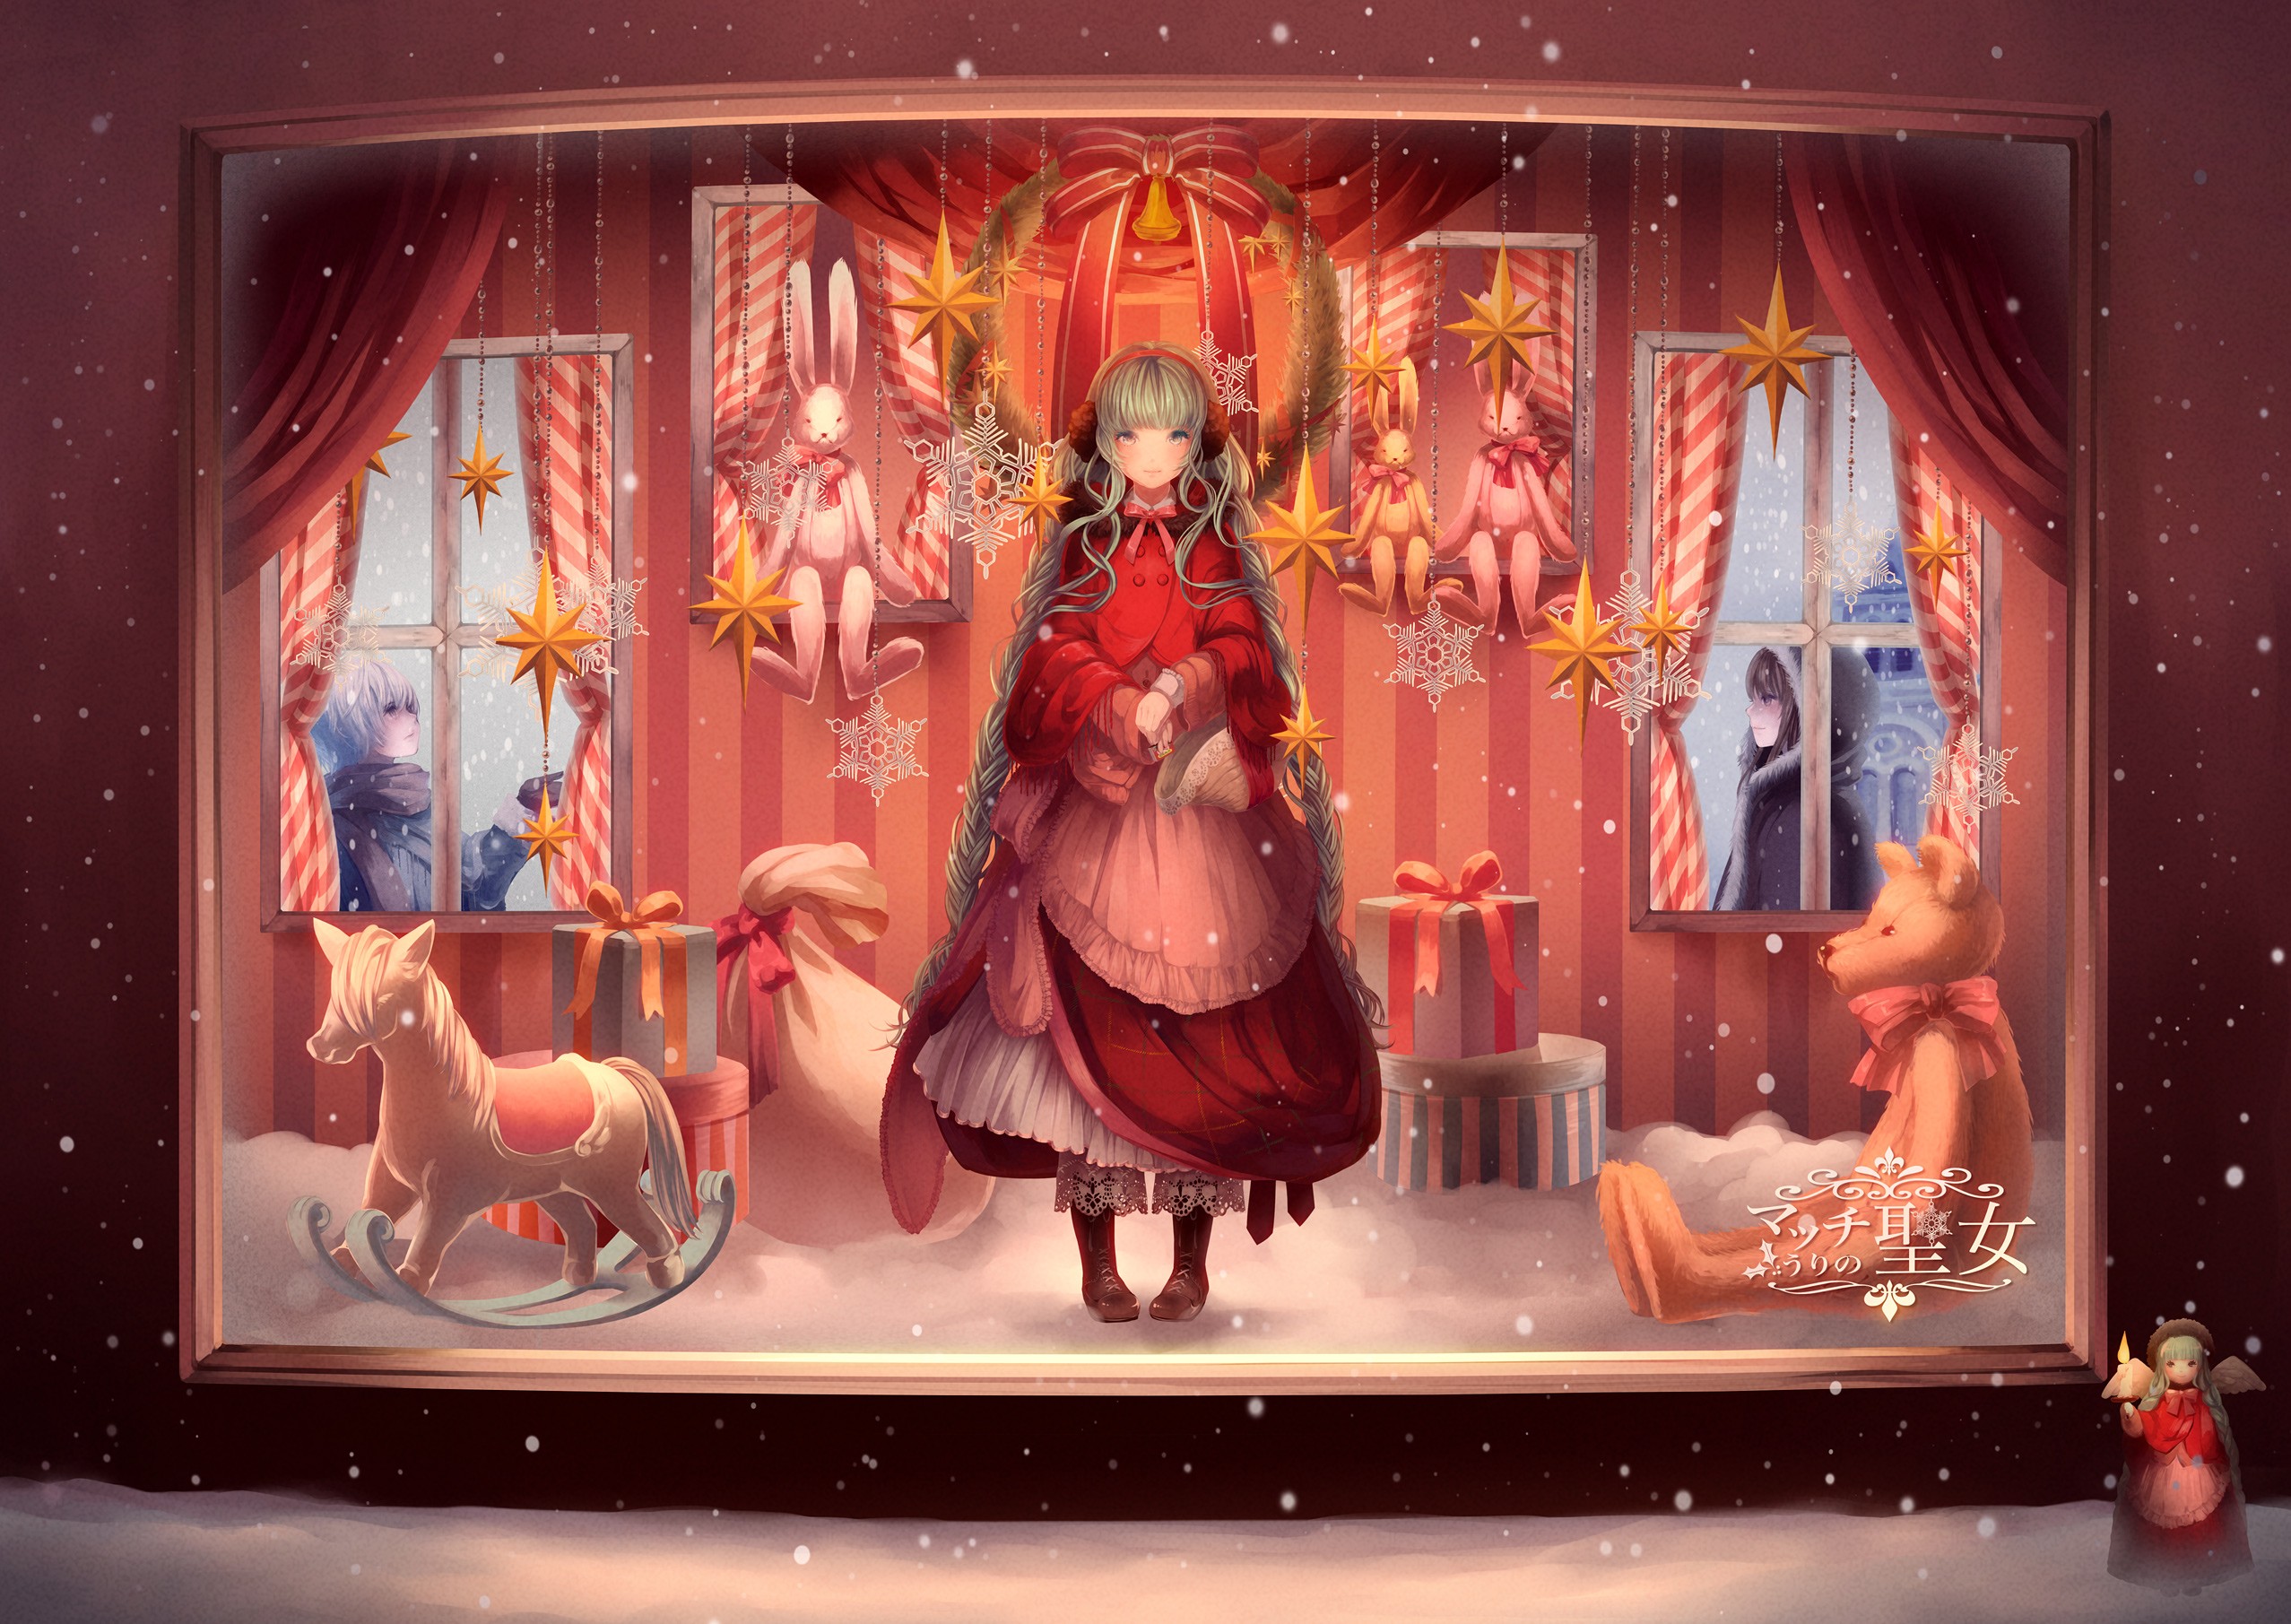 Anime 2555x1811 Vocaloid Hatsune Miku anime anime girls snow Christmas standing blonde toys presents Christmas presents dress red dress